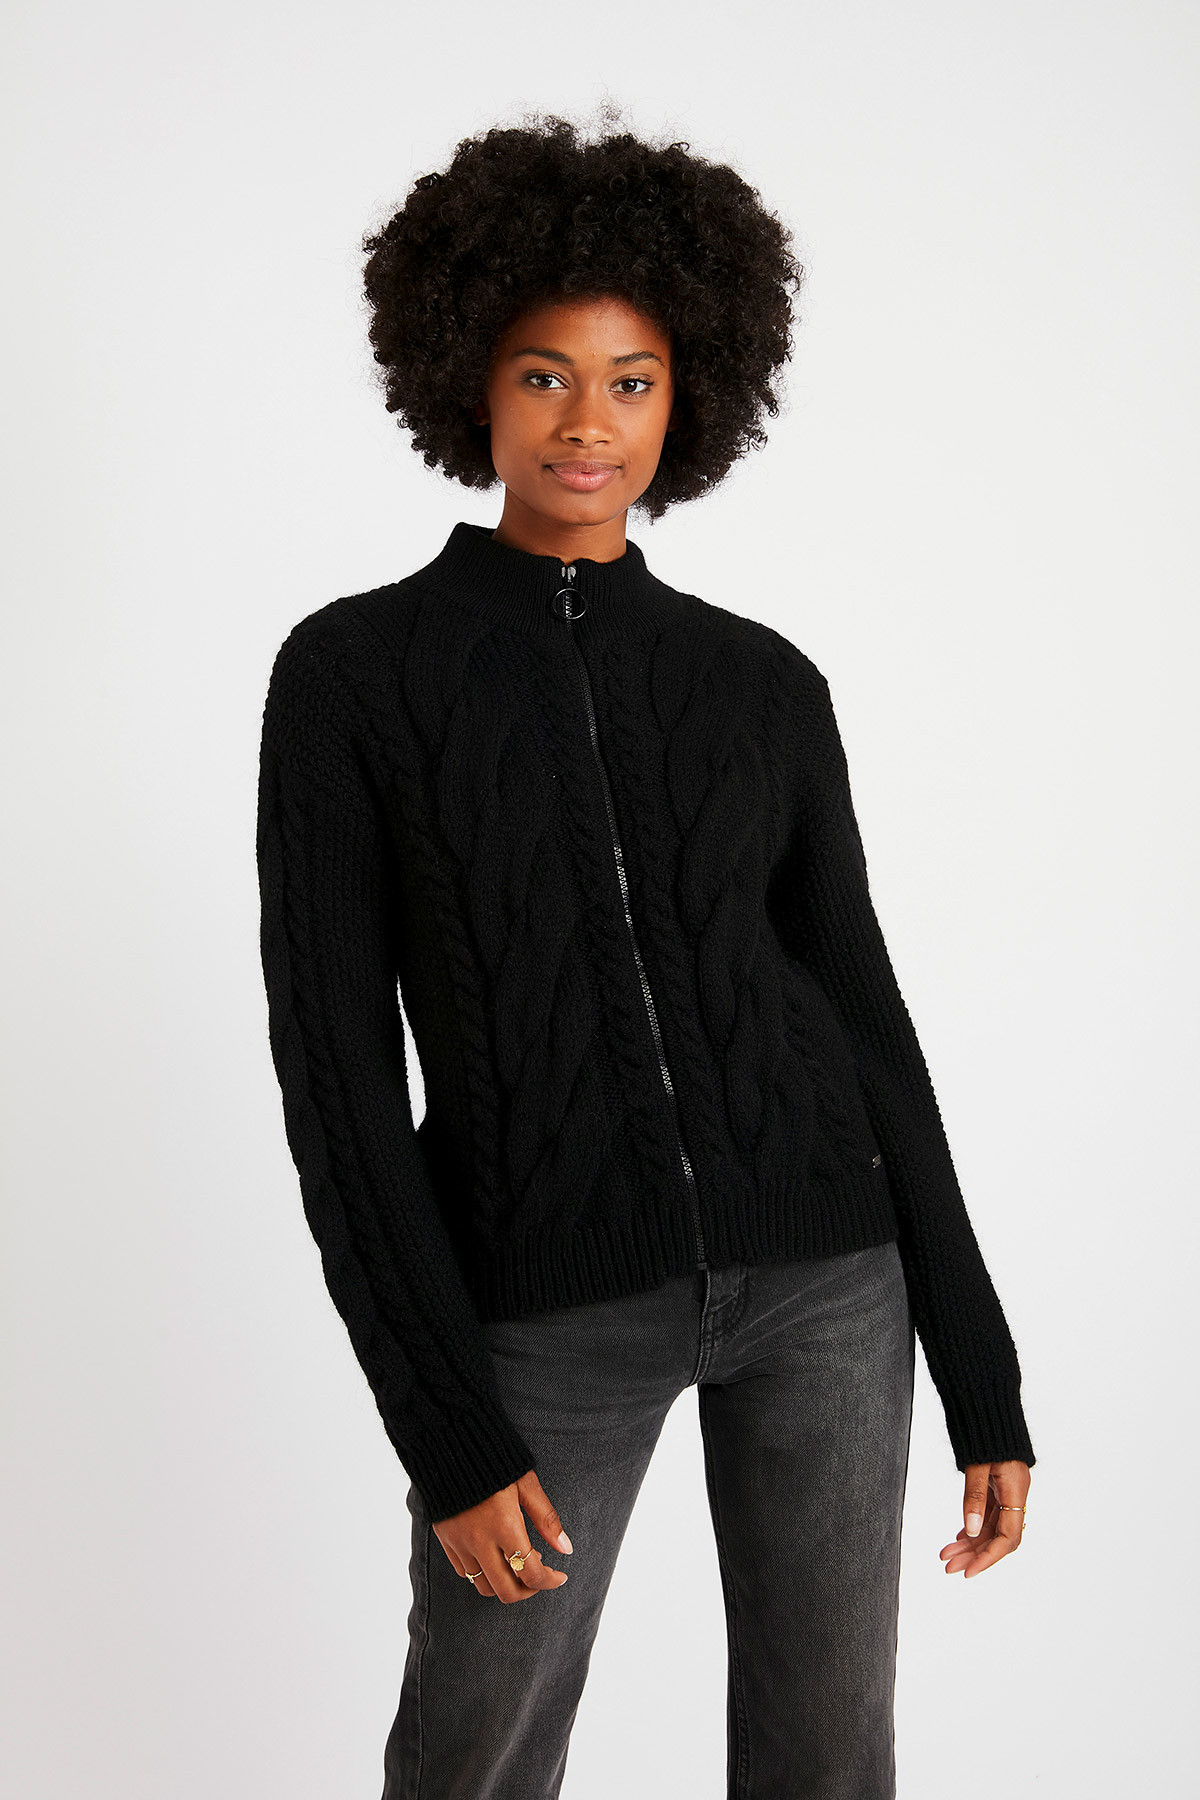 Women's black cable knit cardigan | SIDLEY CHOCTAW | Banana Moon ...